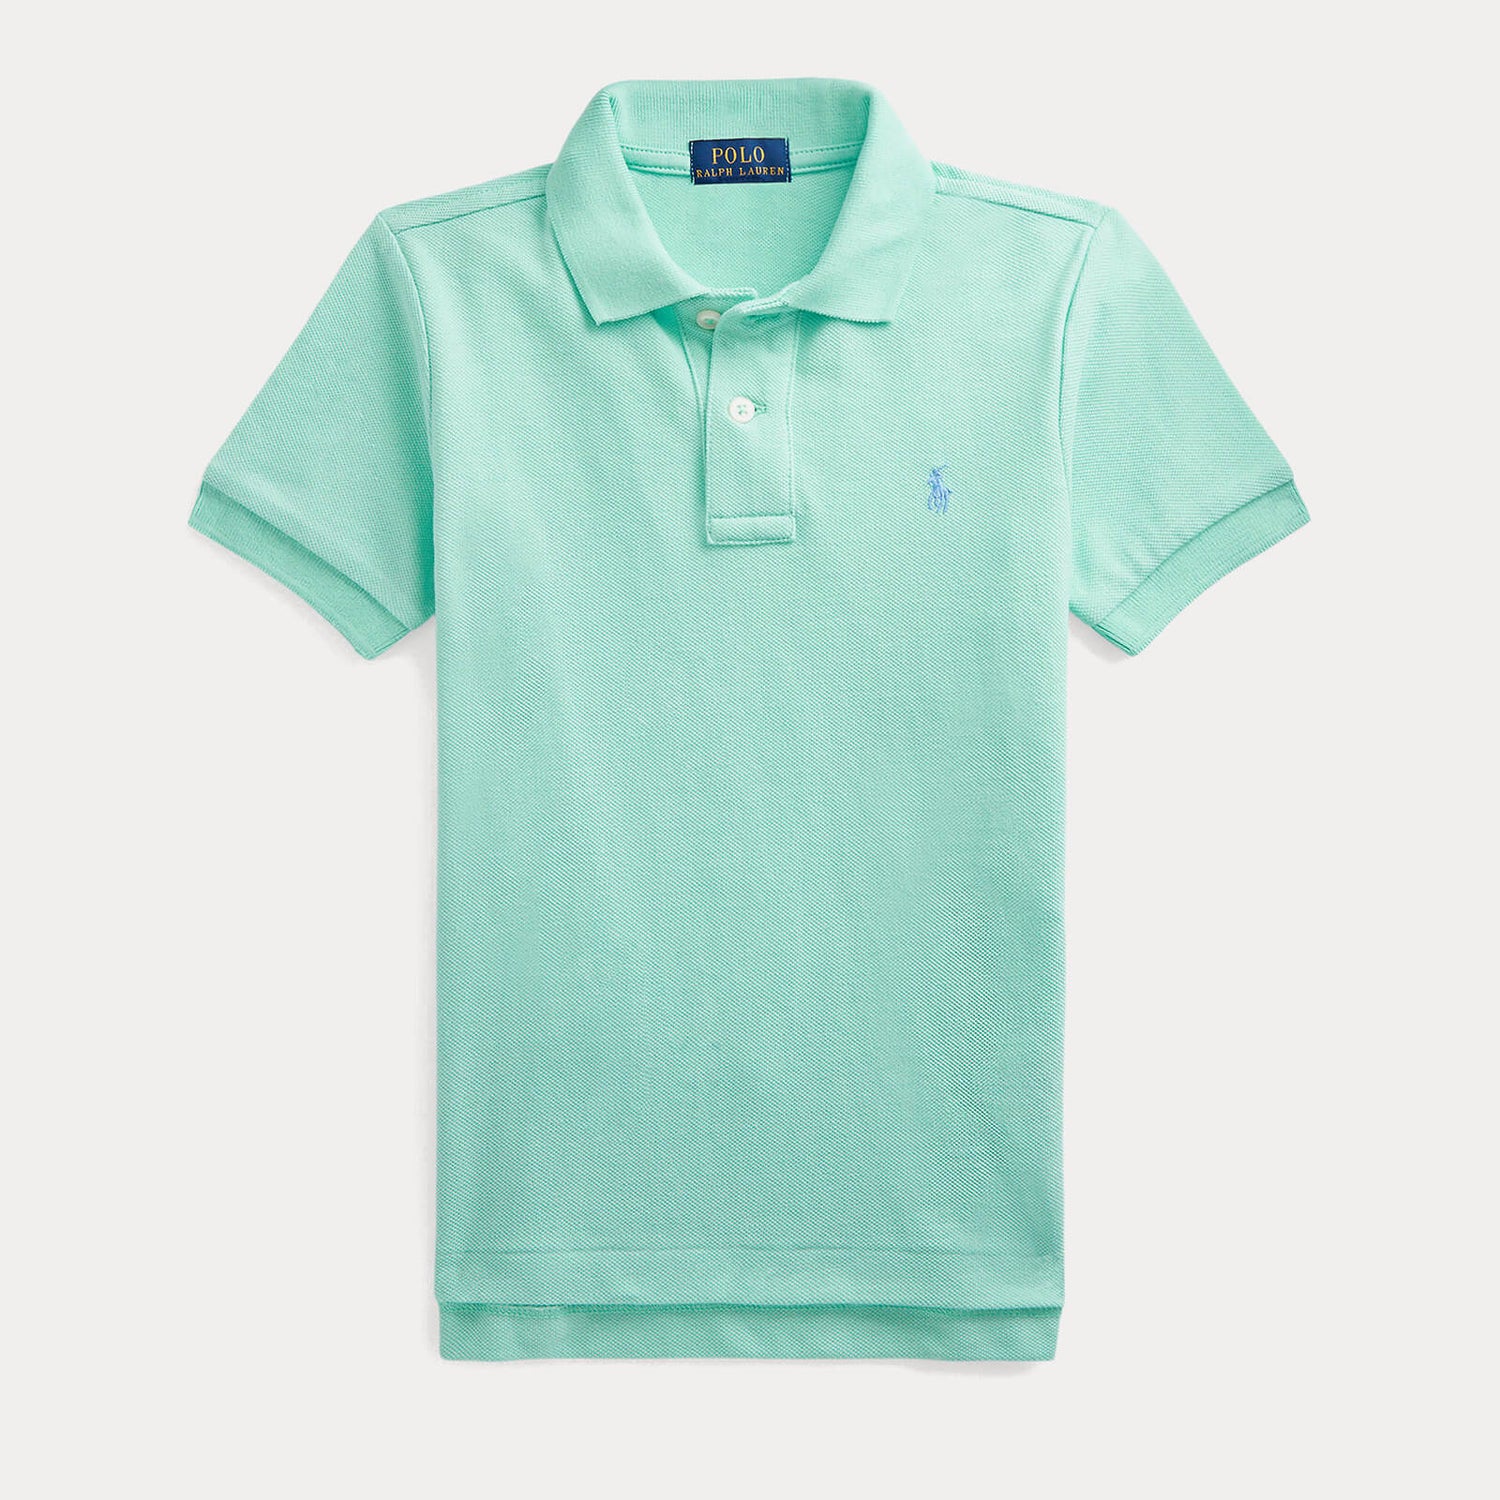 Ralph Lauren Boys Short Sleeve Polo Shirt - Aqua Verde - 4 Years